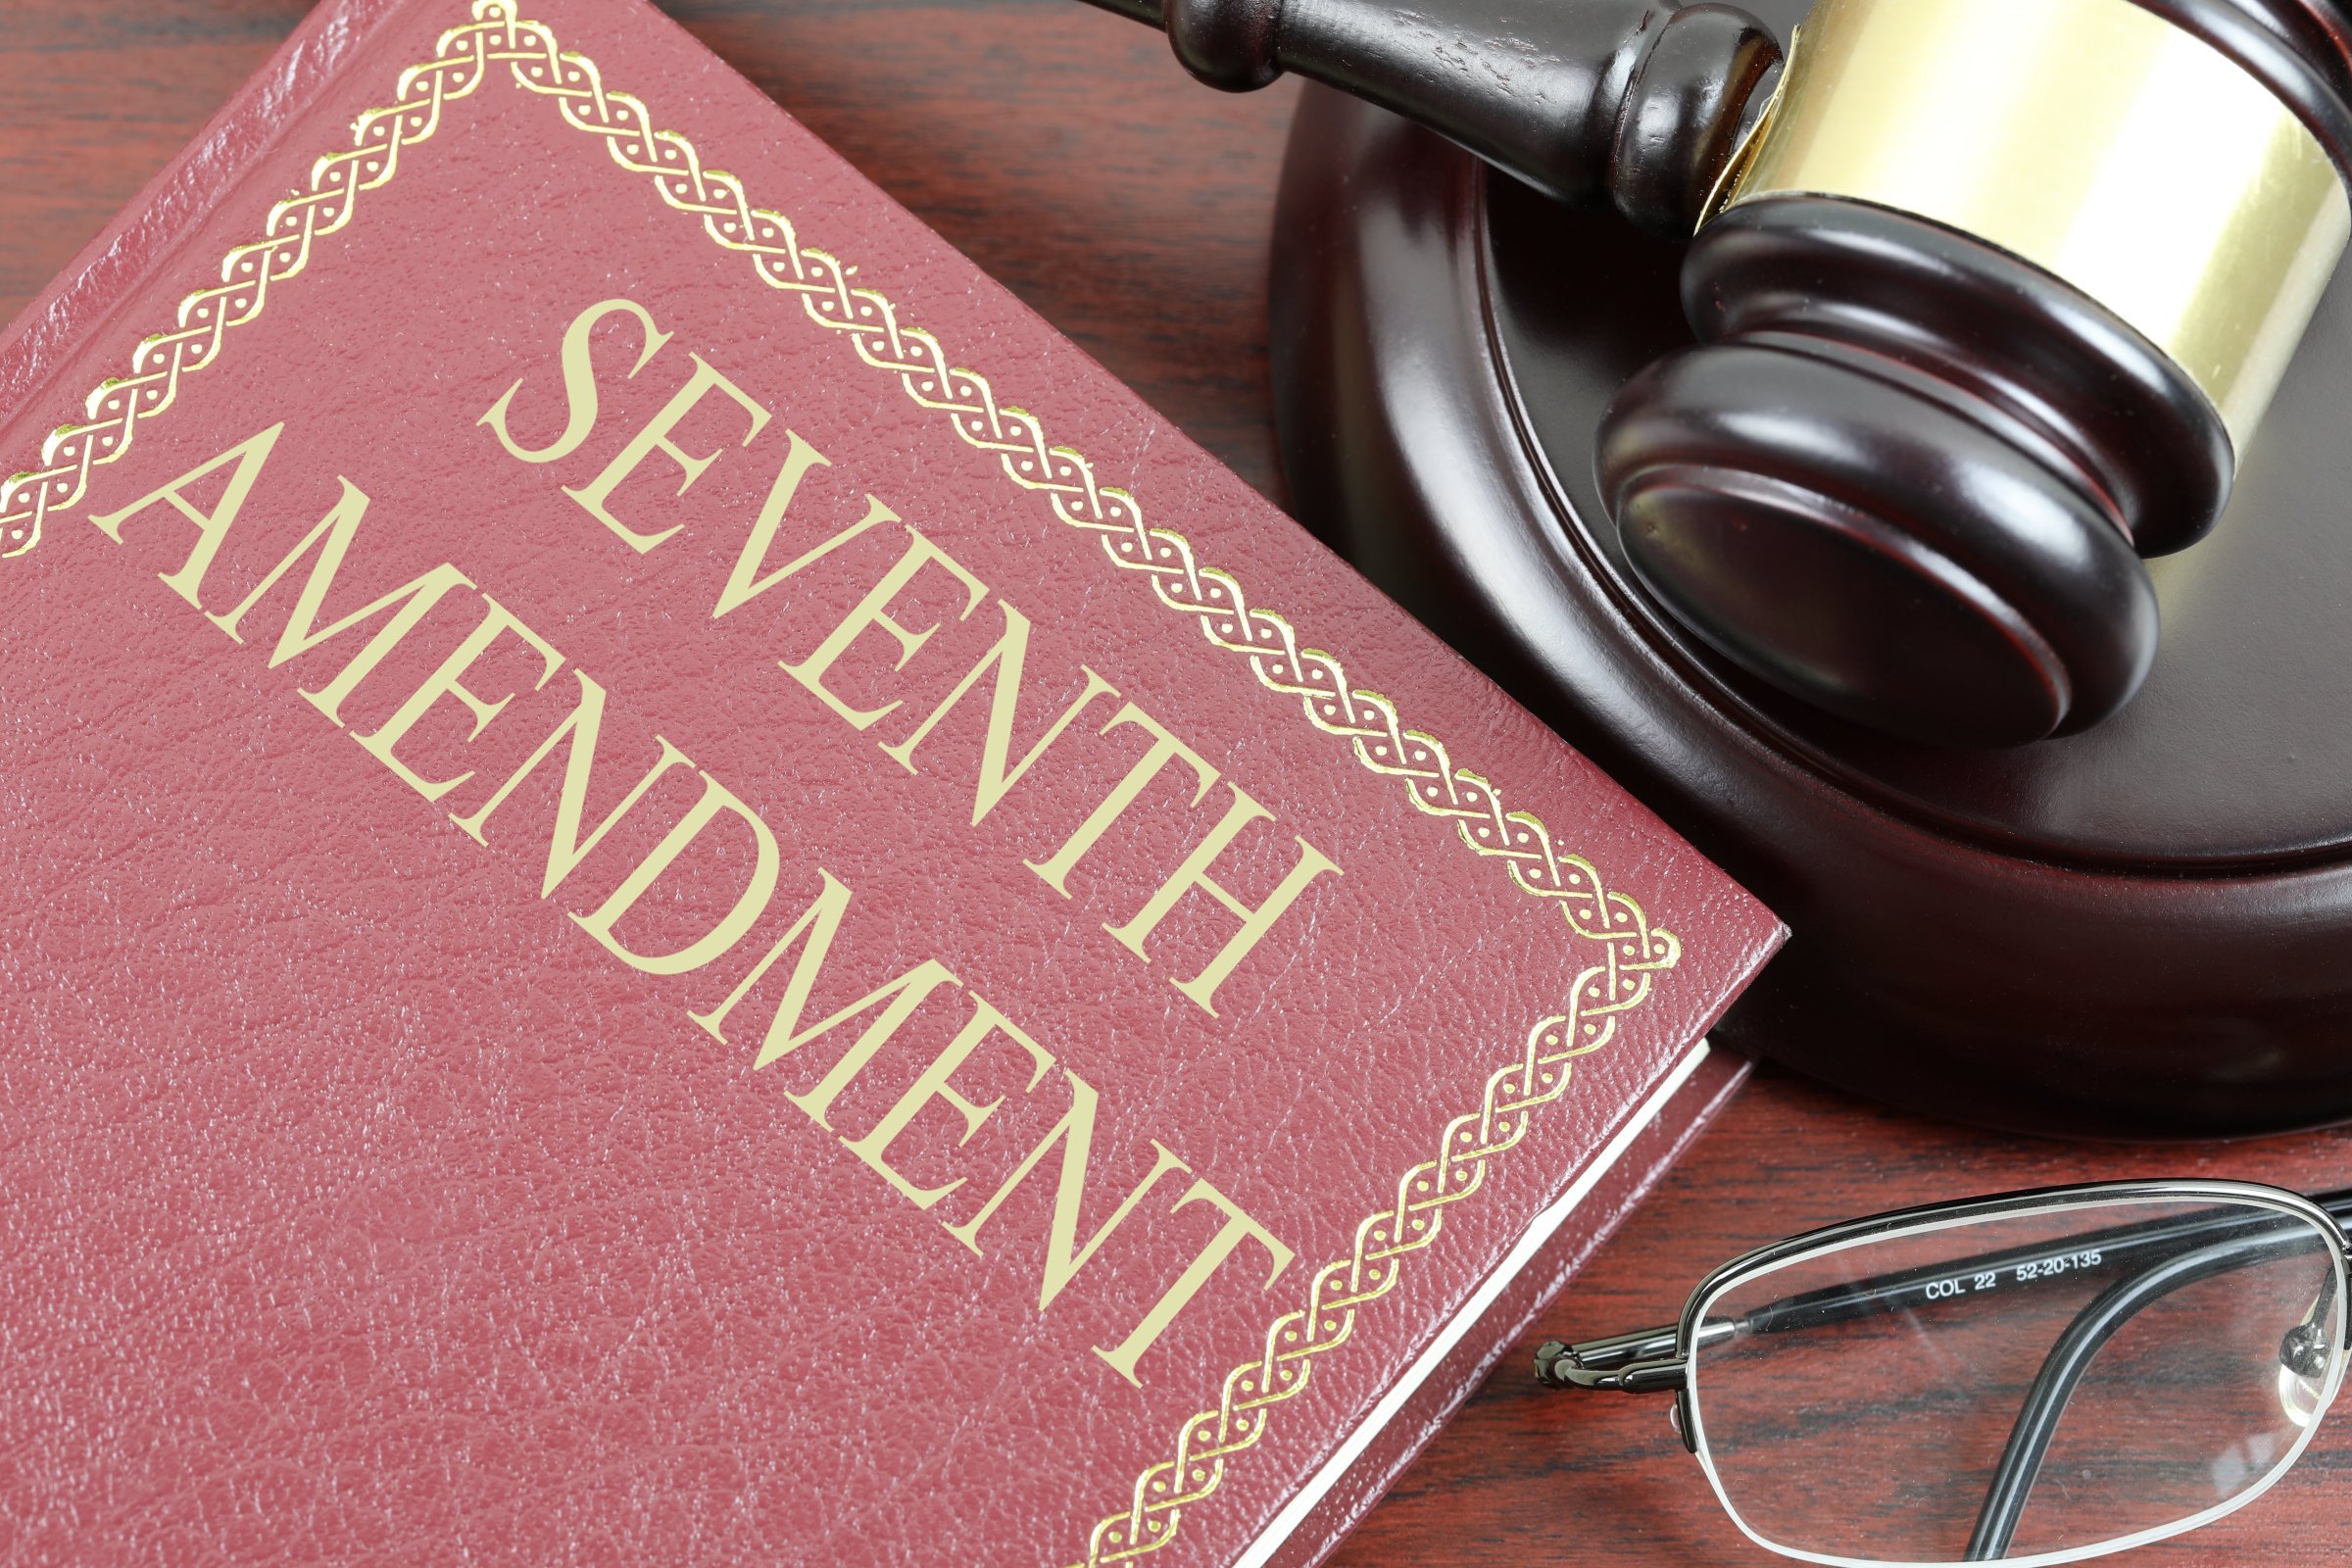 seventh amendment